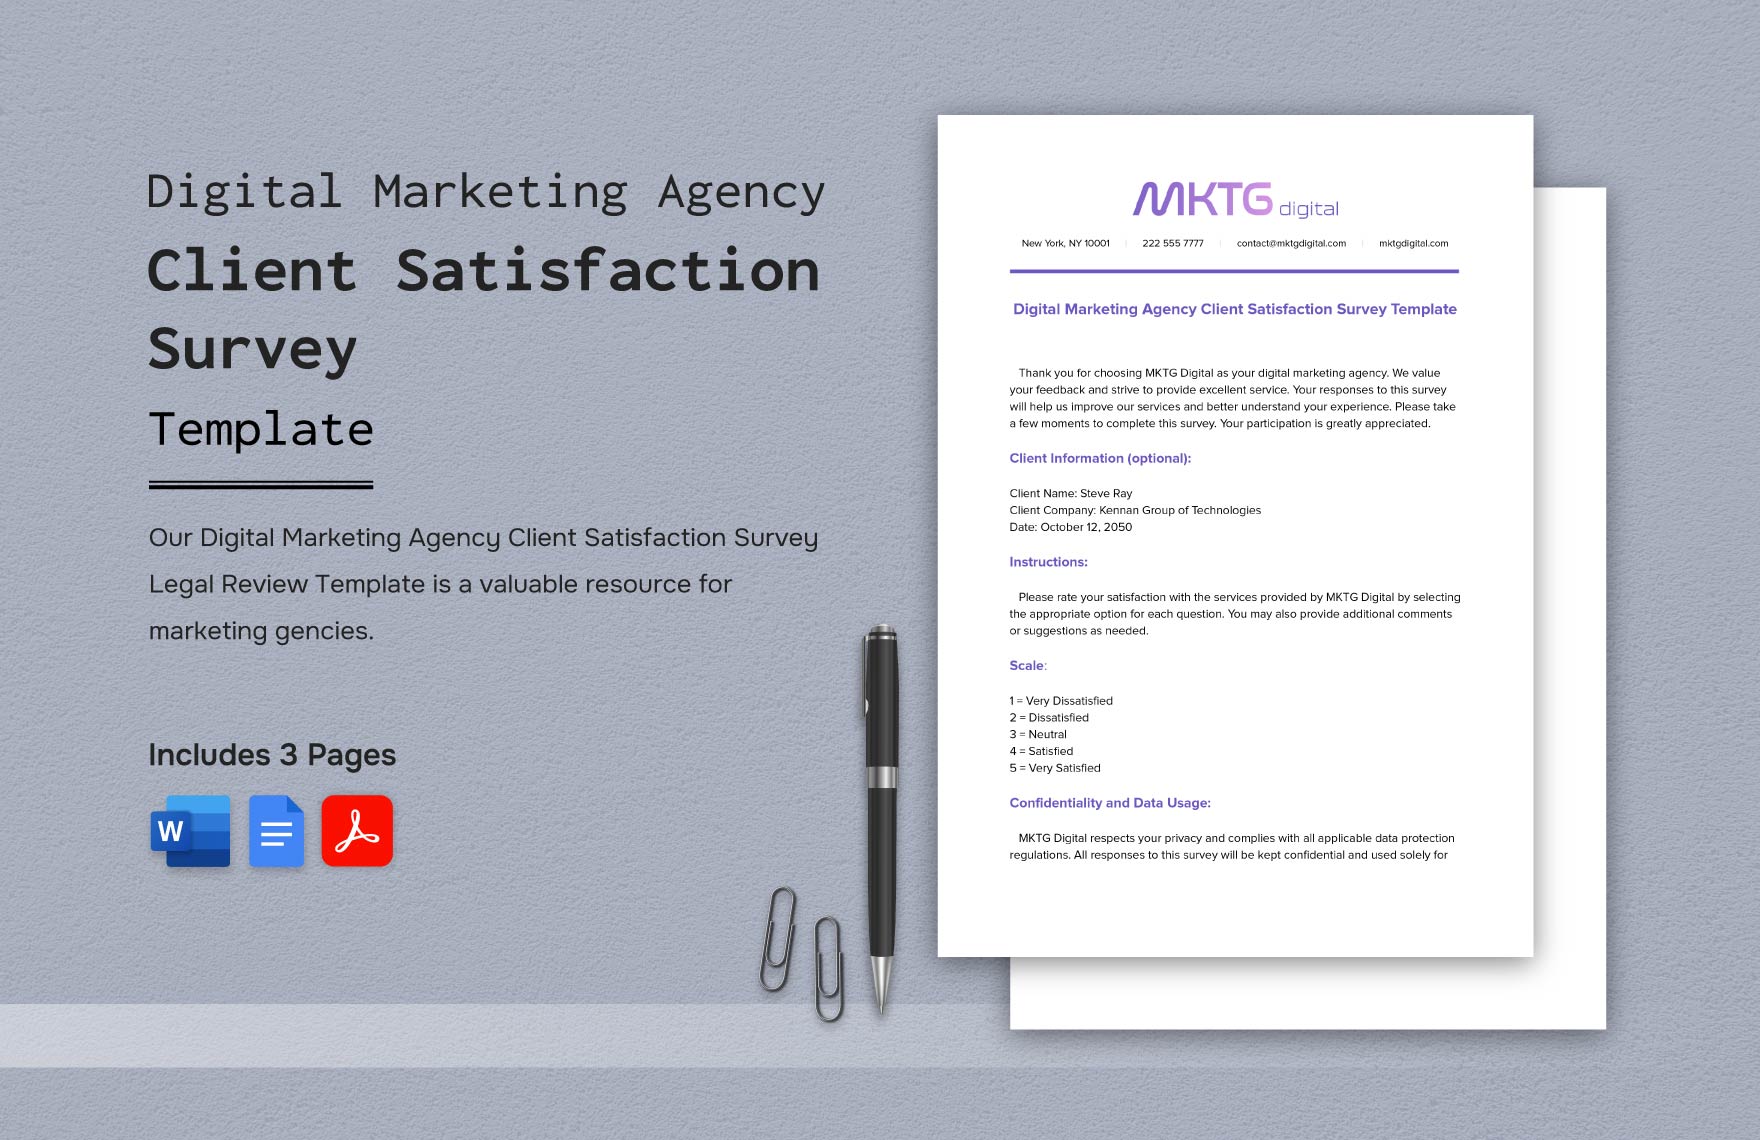 Digital Marketing Agency Client Satisfaction Survey Template in Word, Google Docs, PDF